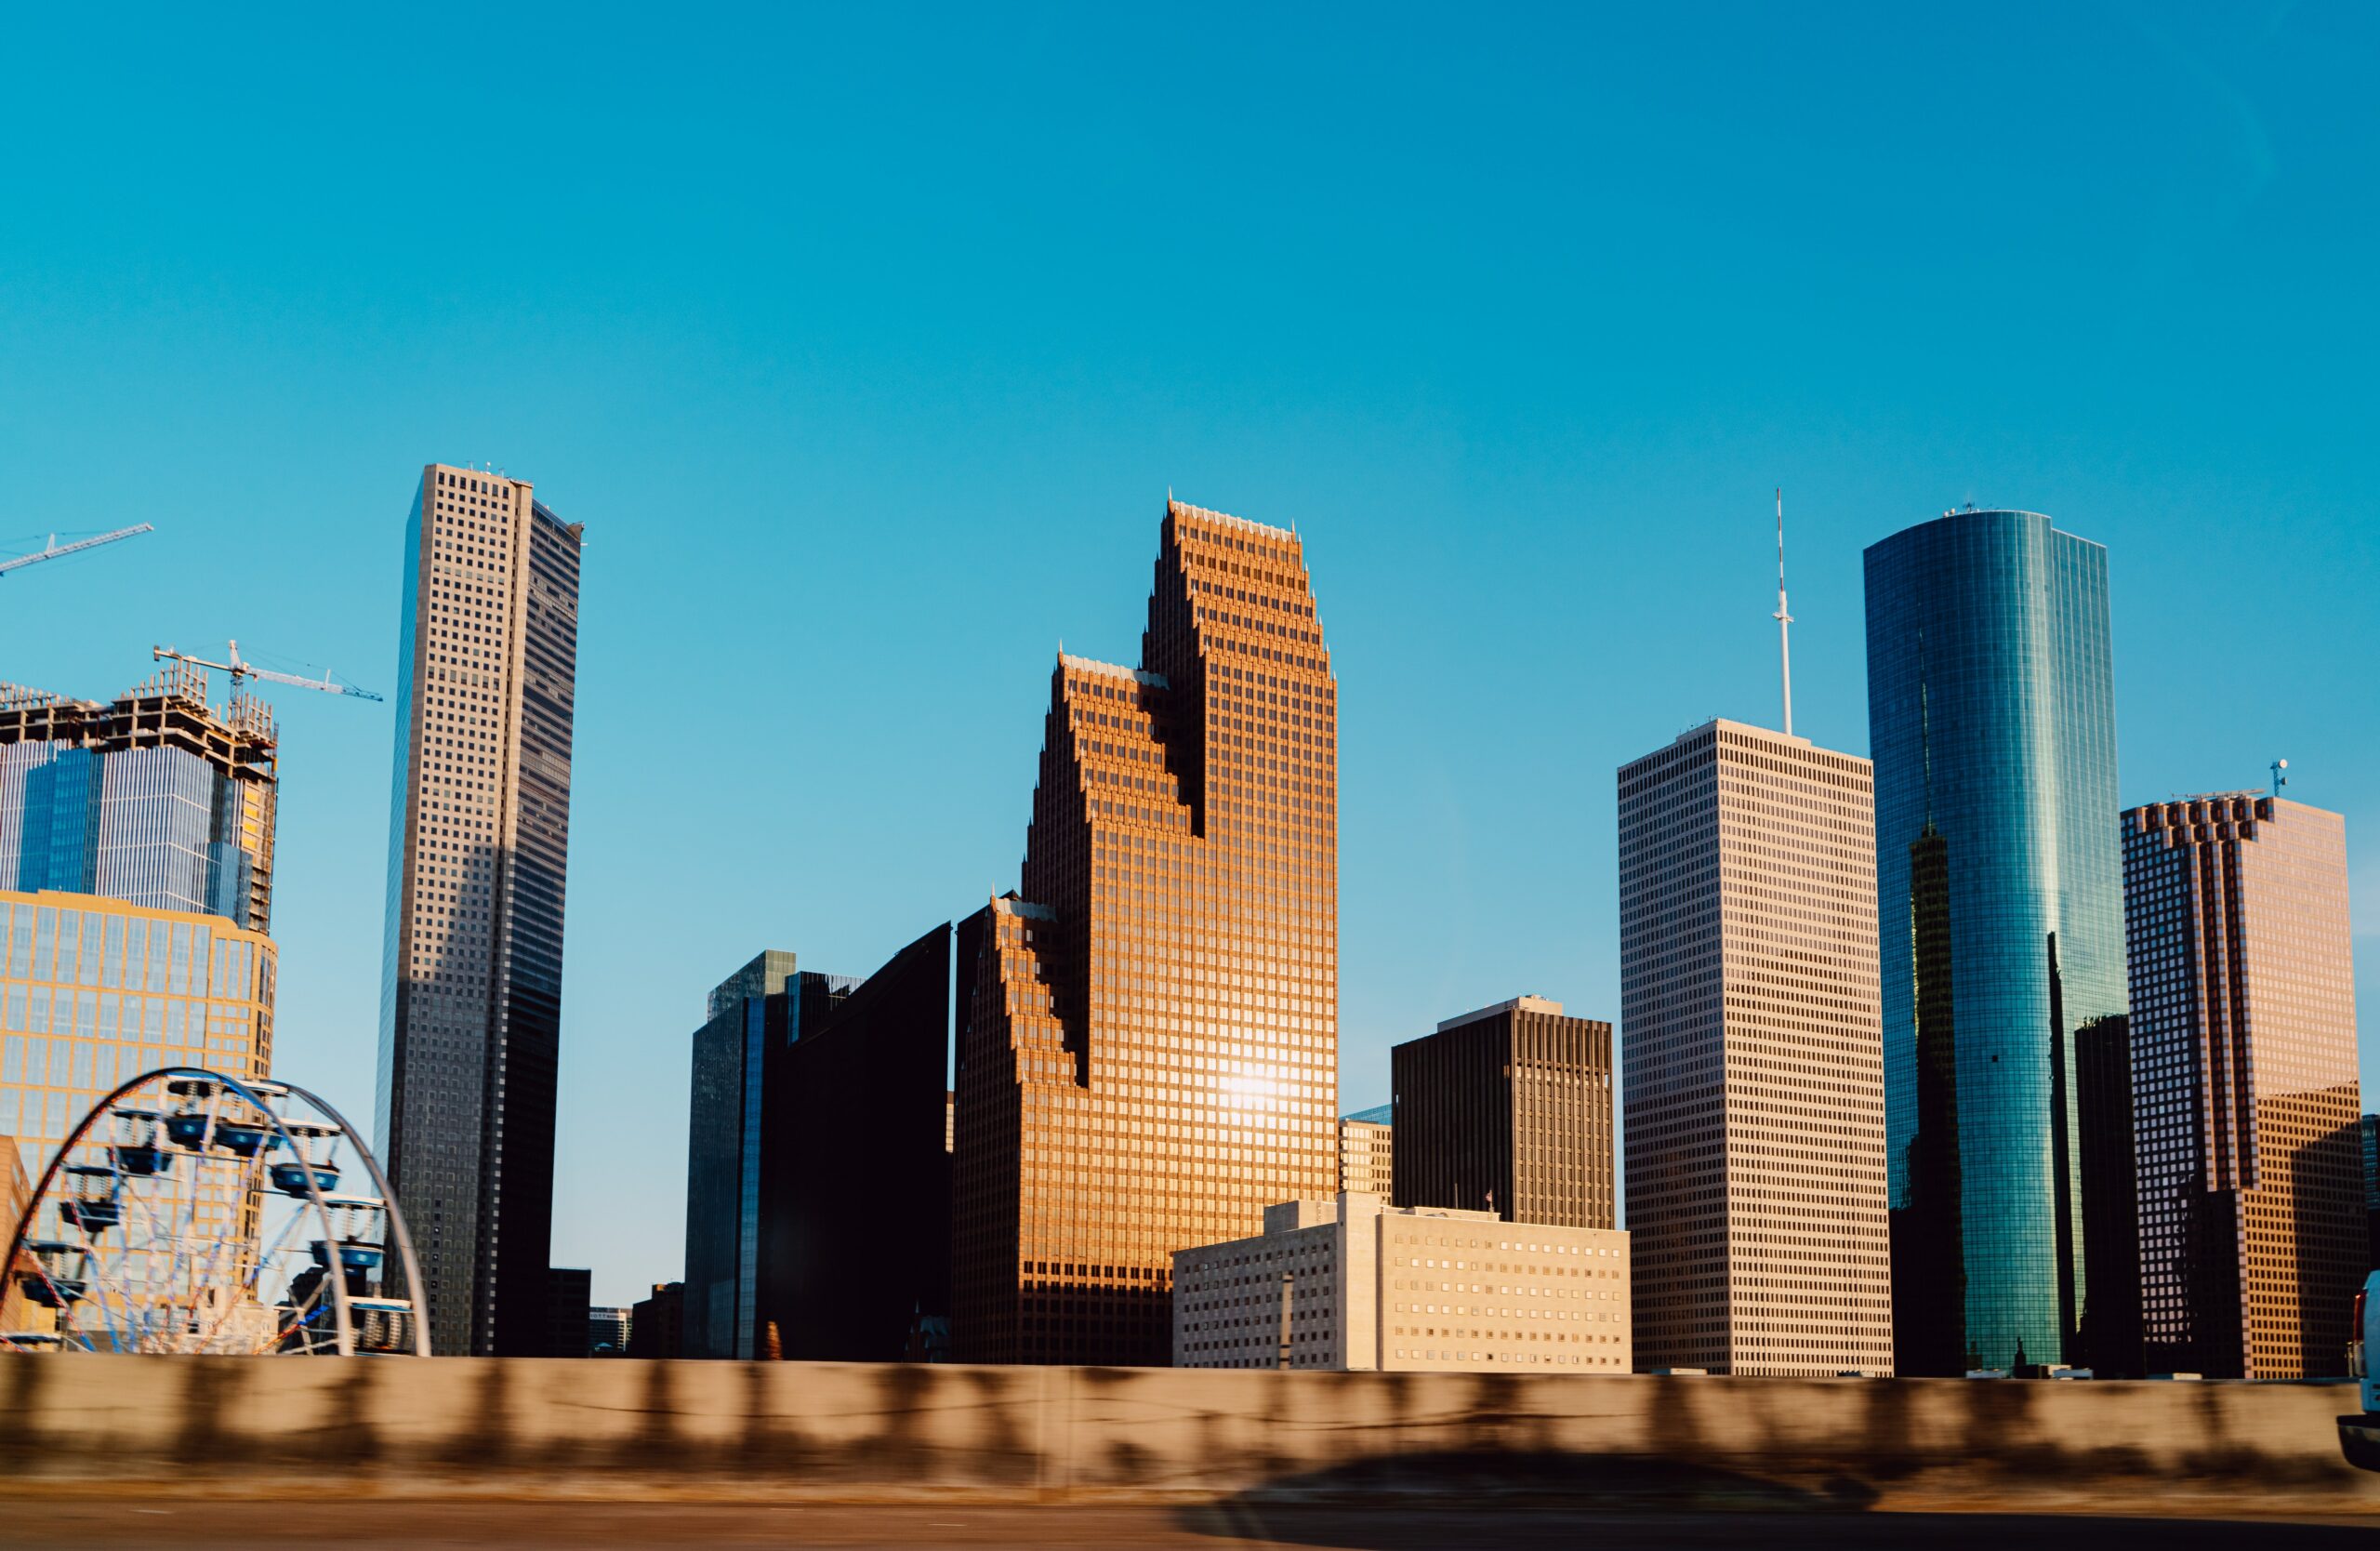 The Houston Skyline